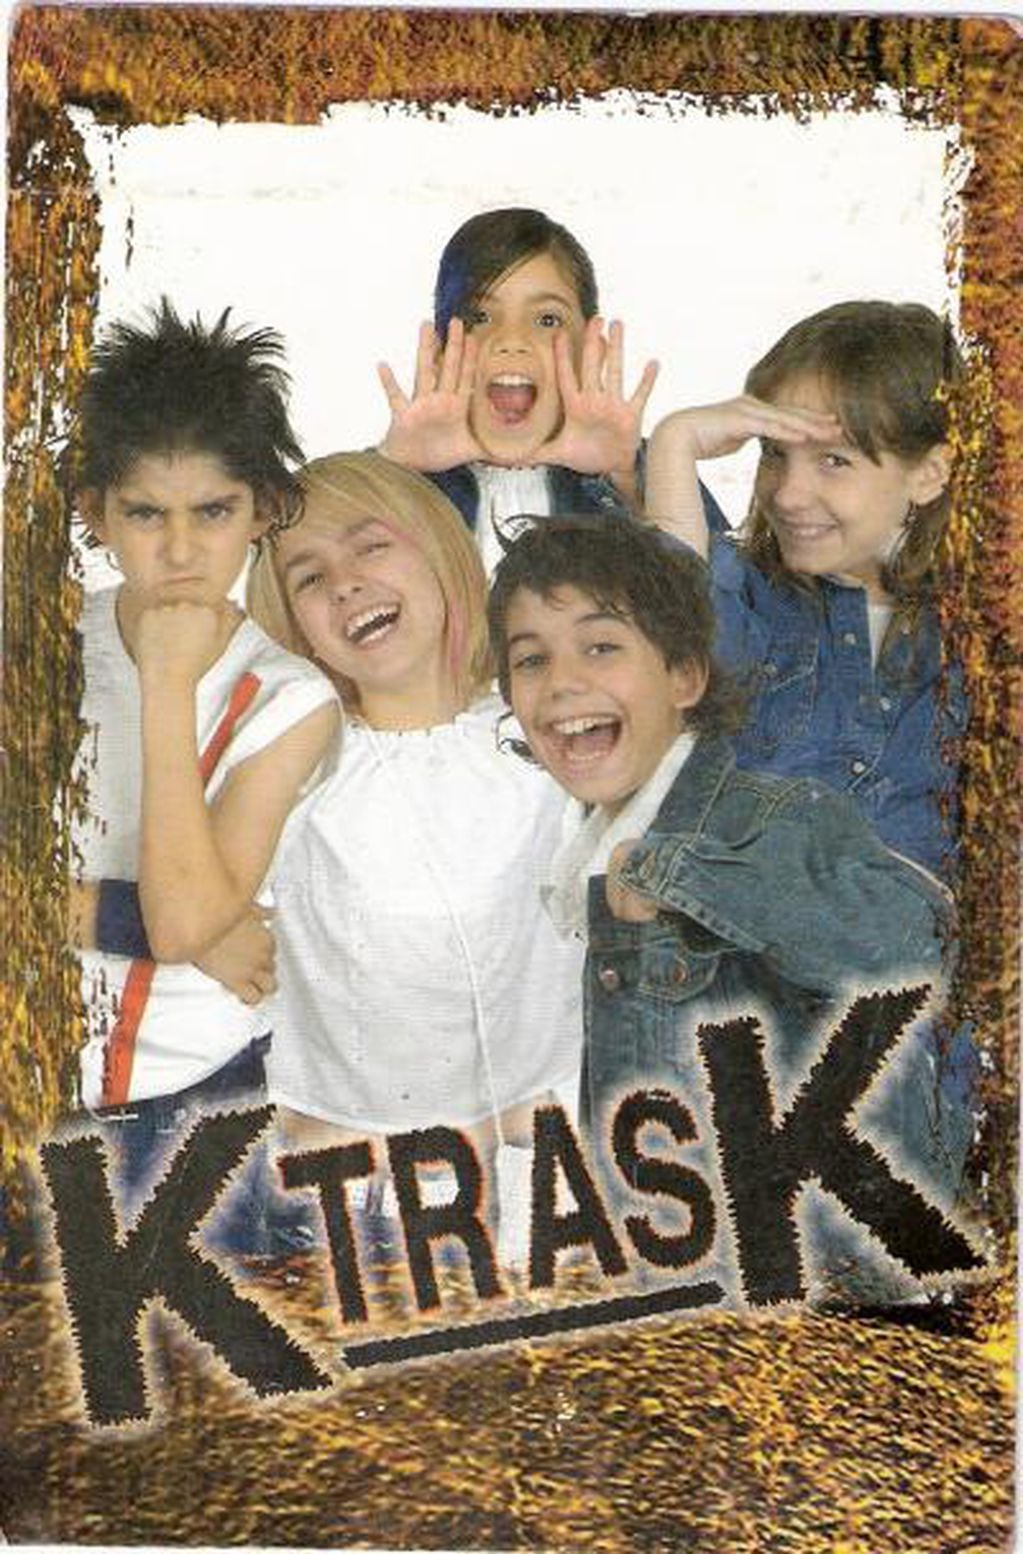 Ktraska, banda de los 2000.